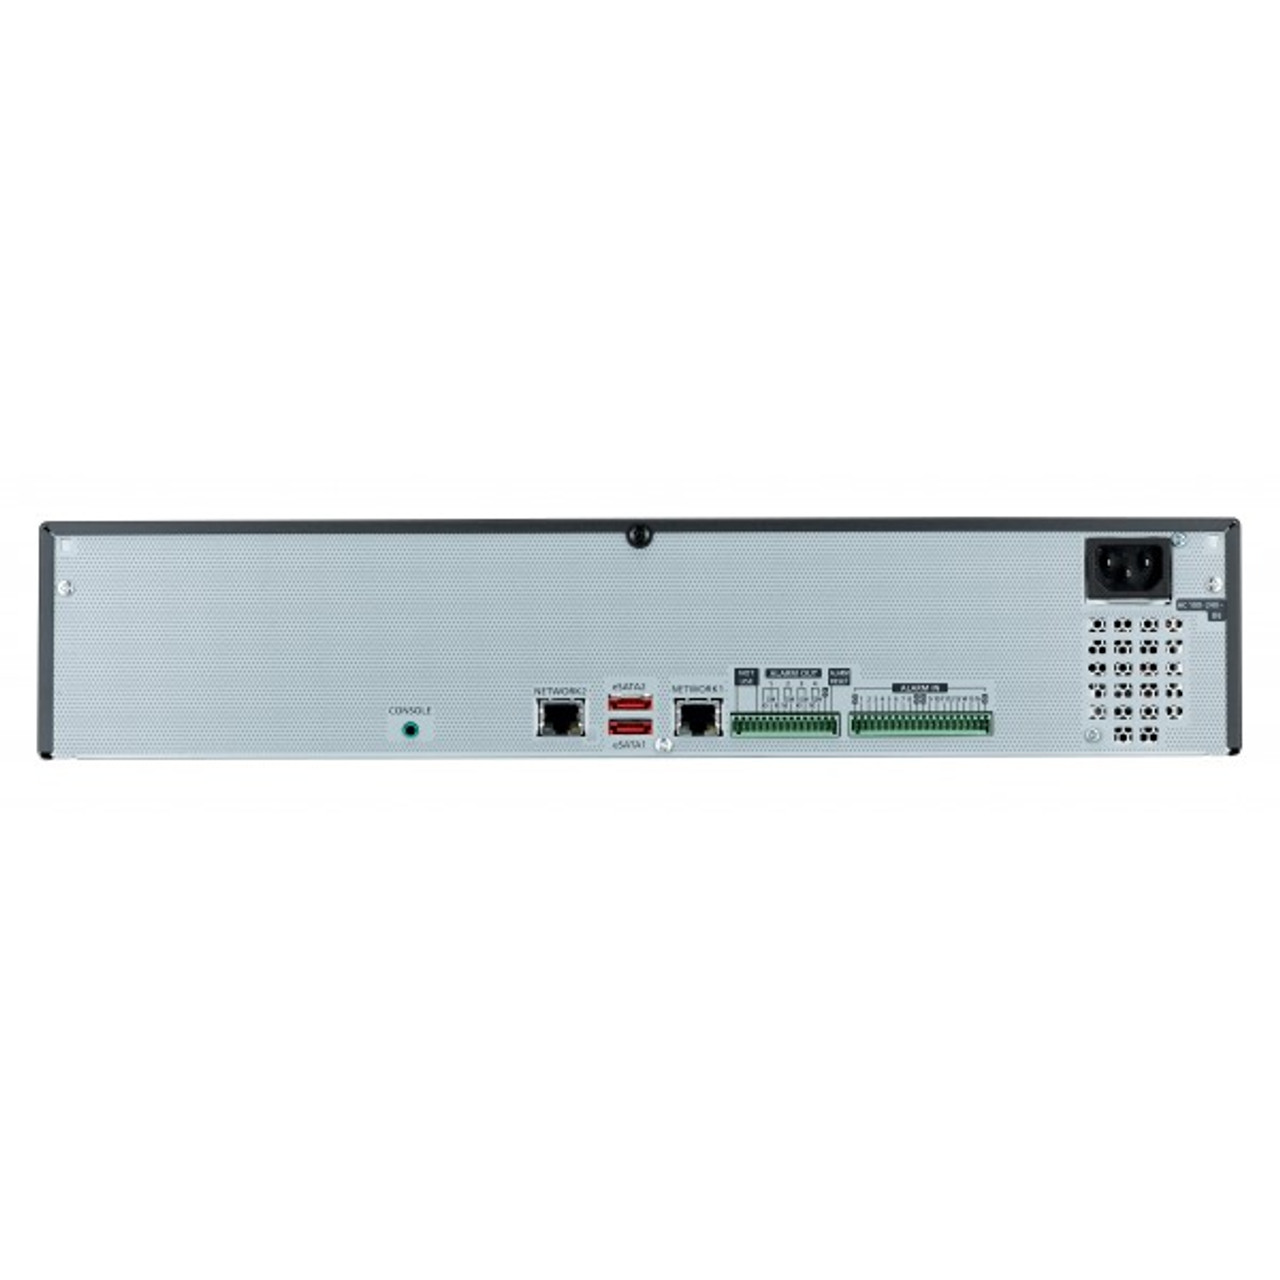 Samsung Hanwha SRN-1000-20TB 64 Channel NVR